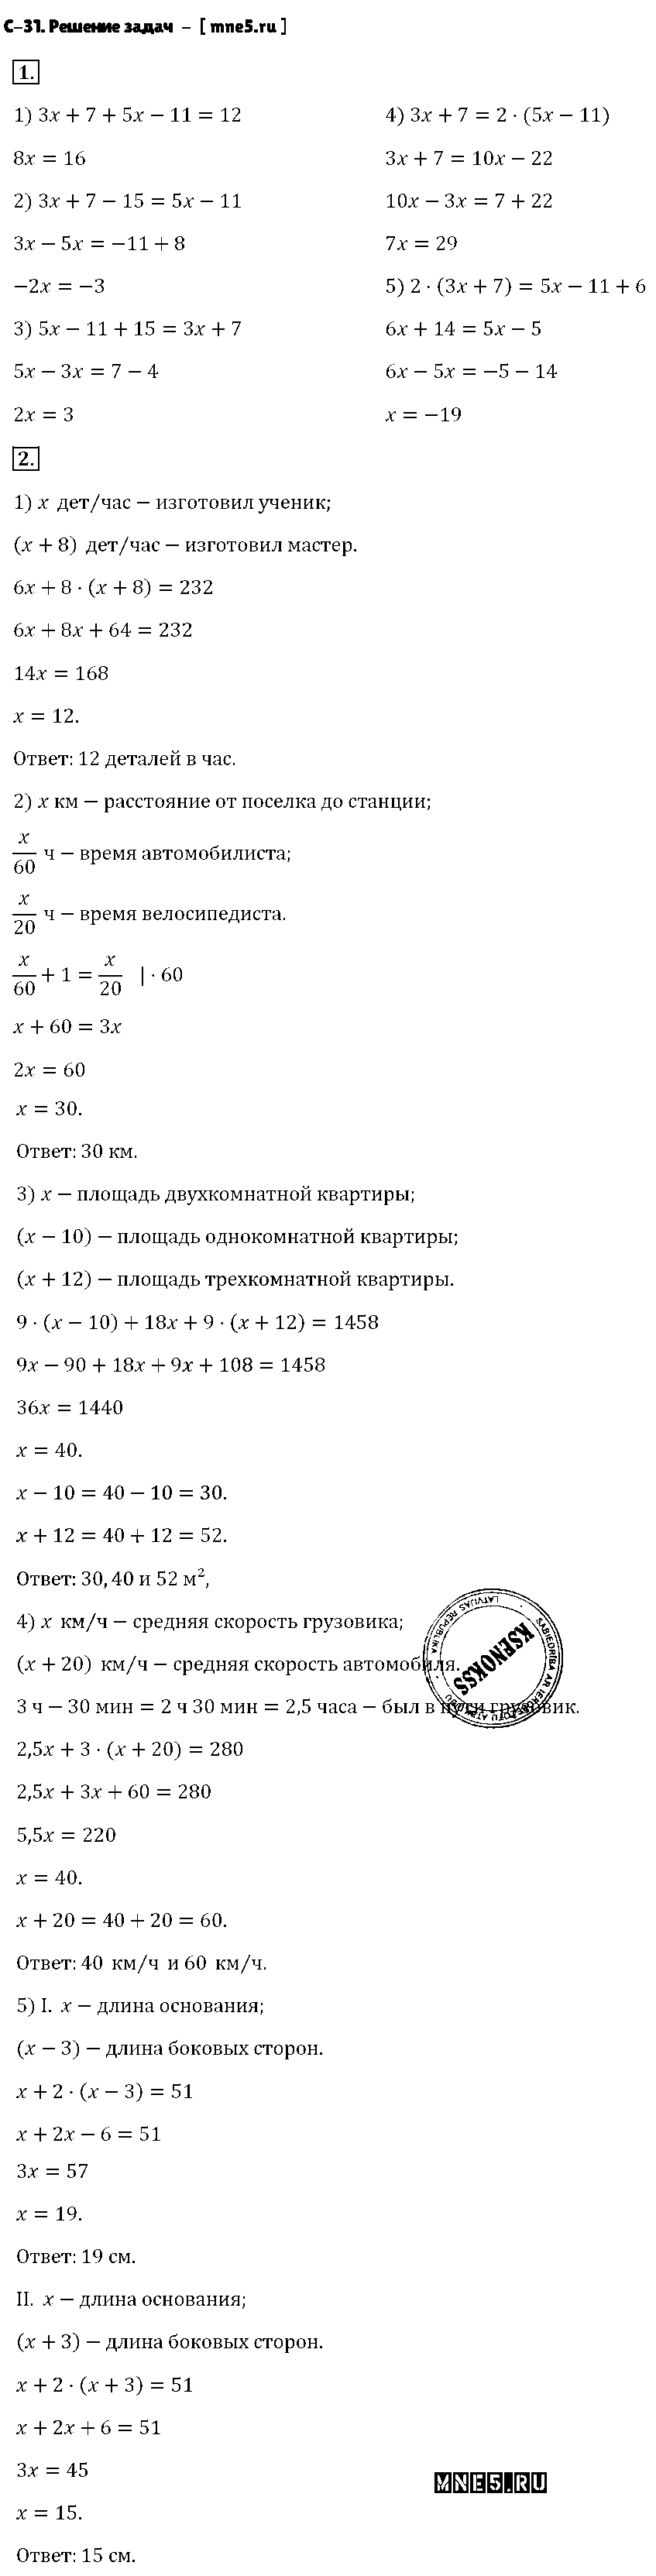 ГДЗ Алгебра 7 класс - С-31. Решение задач